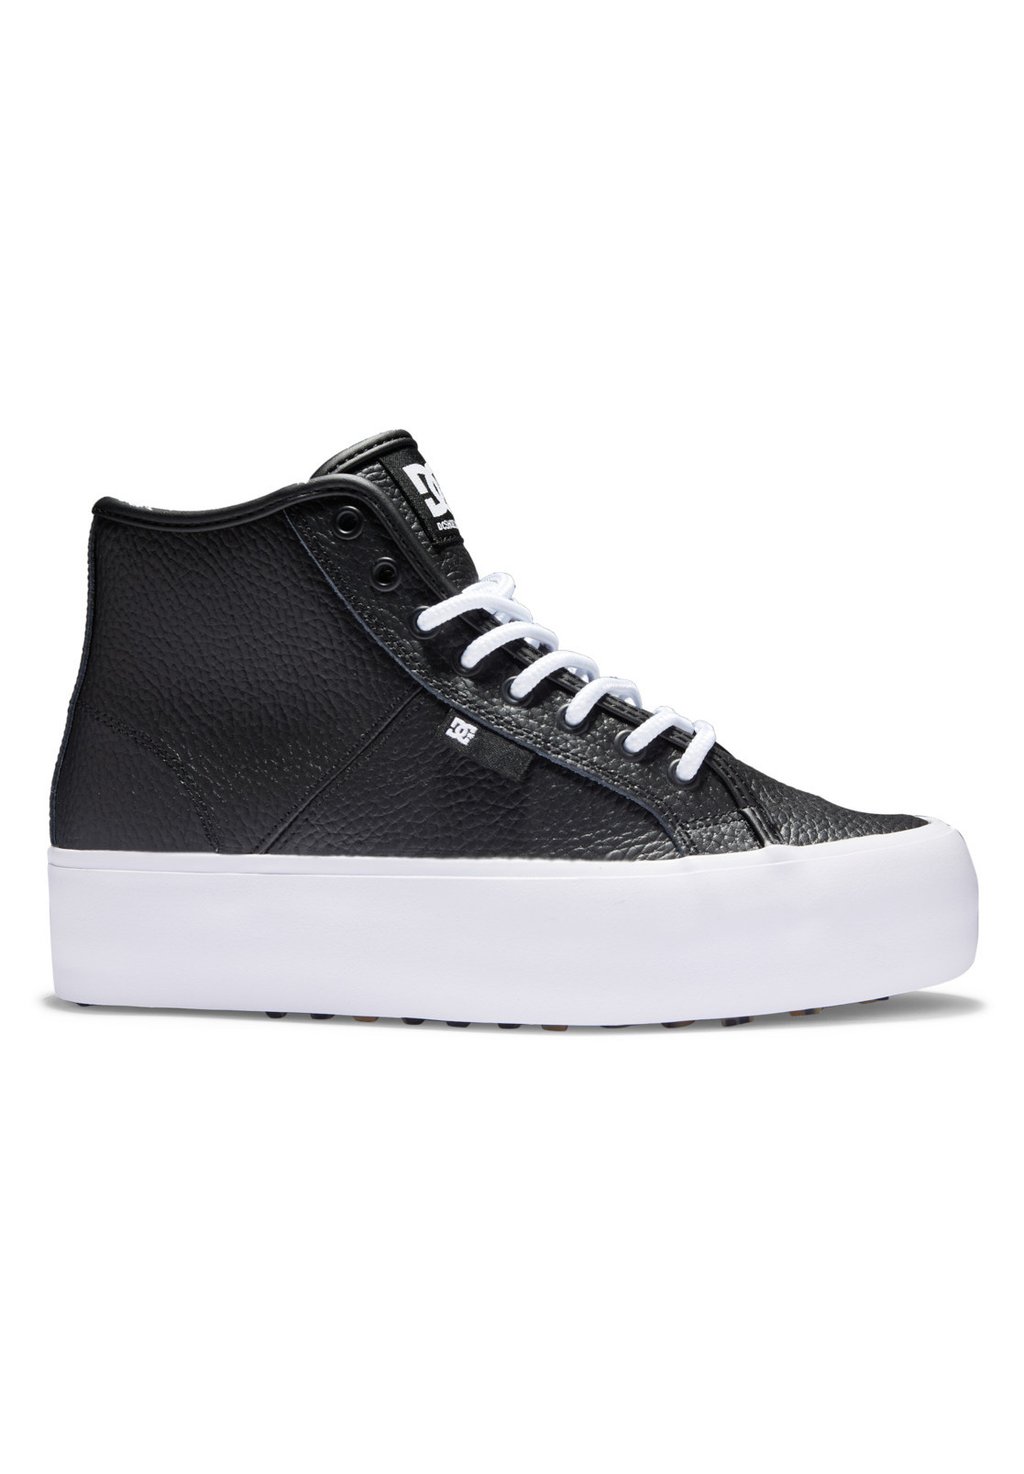 Высокие кроссовки DC Shoes MANUAL, цвет black white кроссовки dc shoes manual black